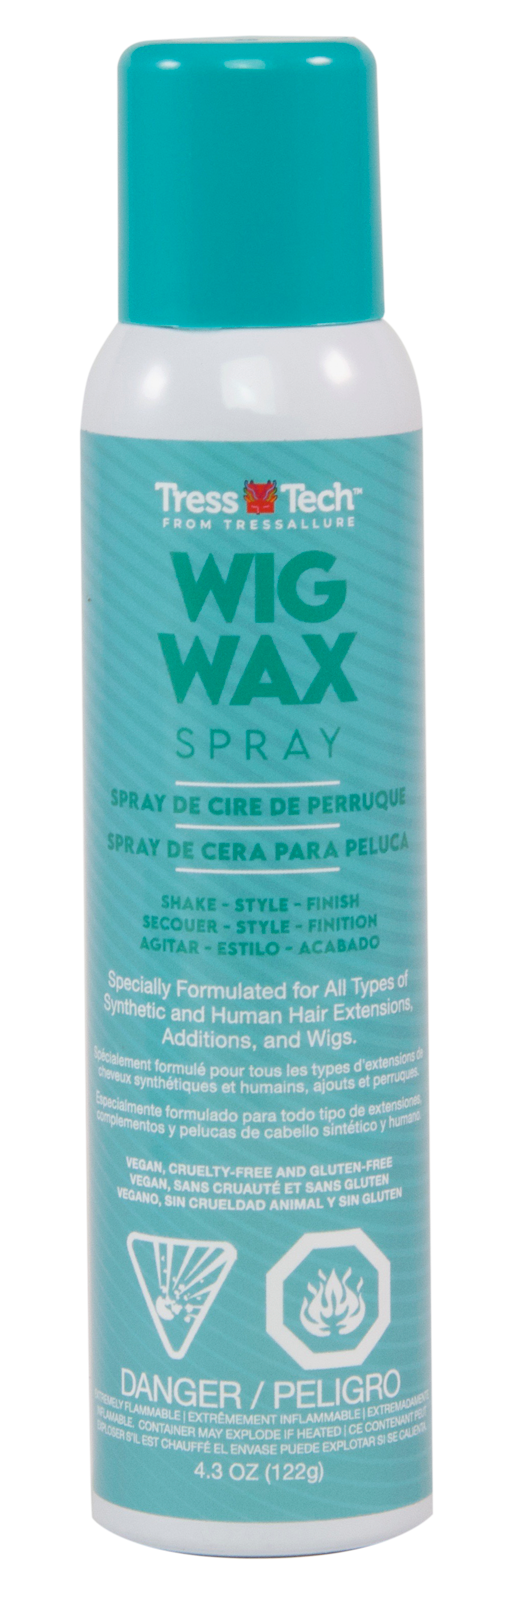 Wig Wax by Tress Allure